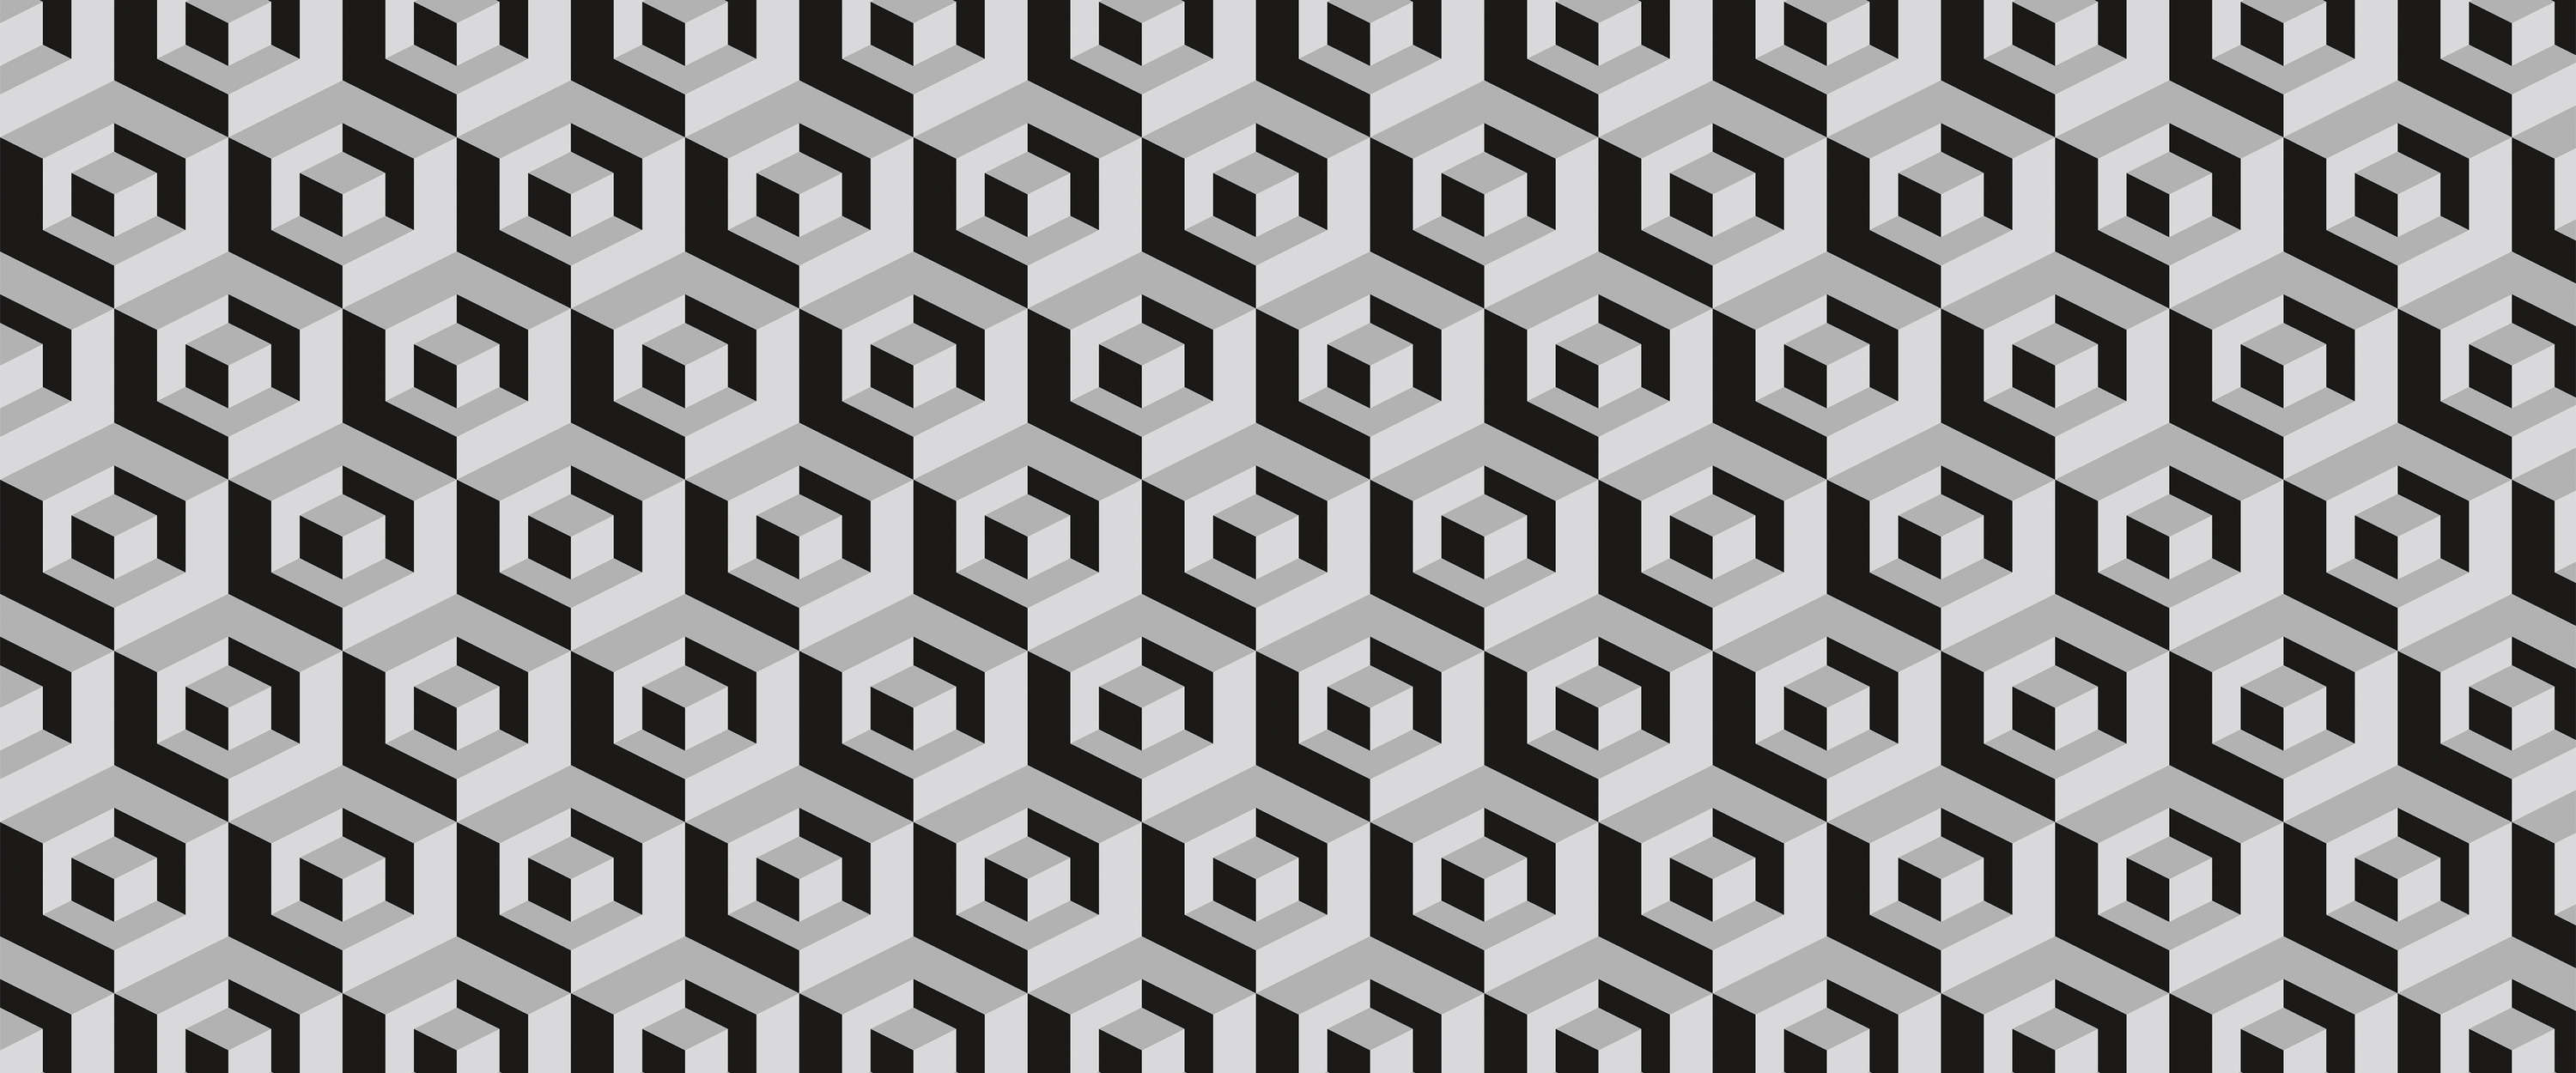             Mural de pared Bloques 3D con efecto de ilusión óptica
        